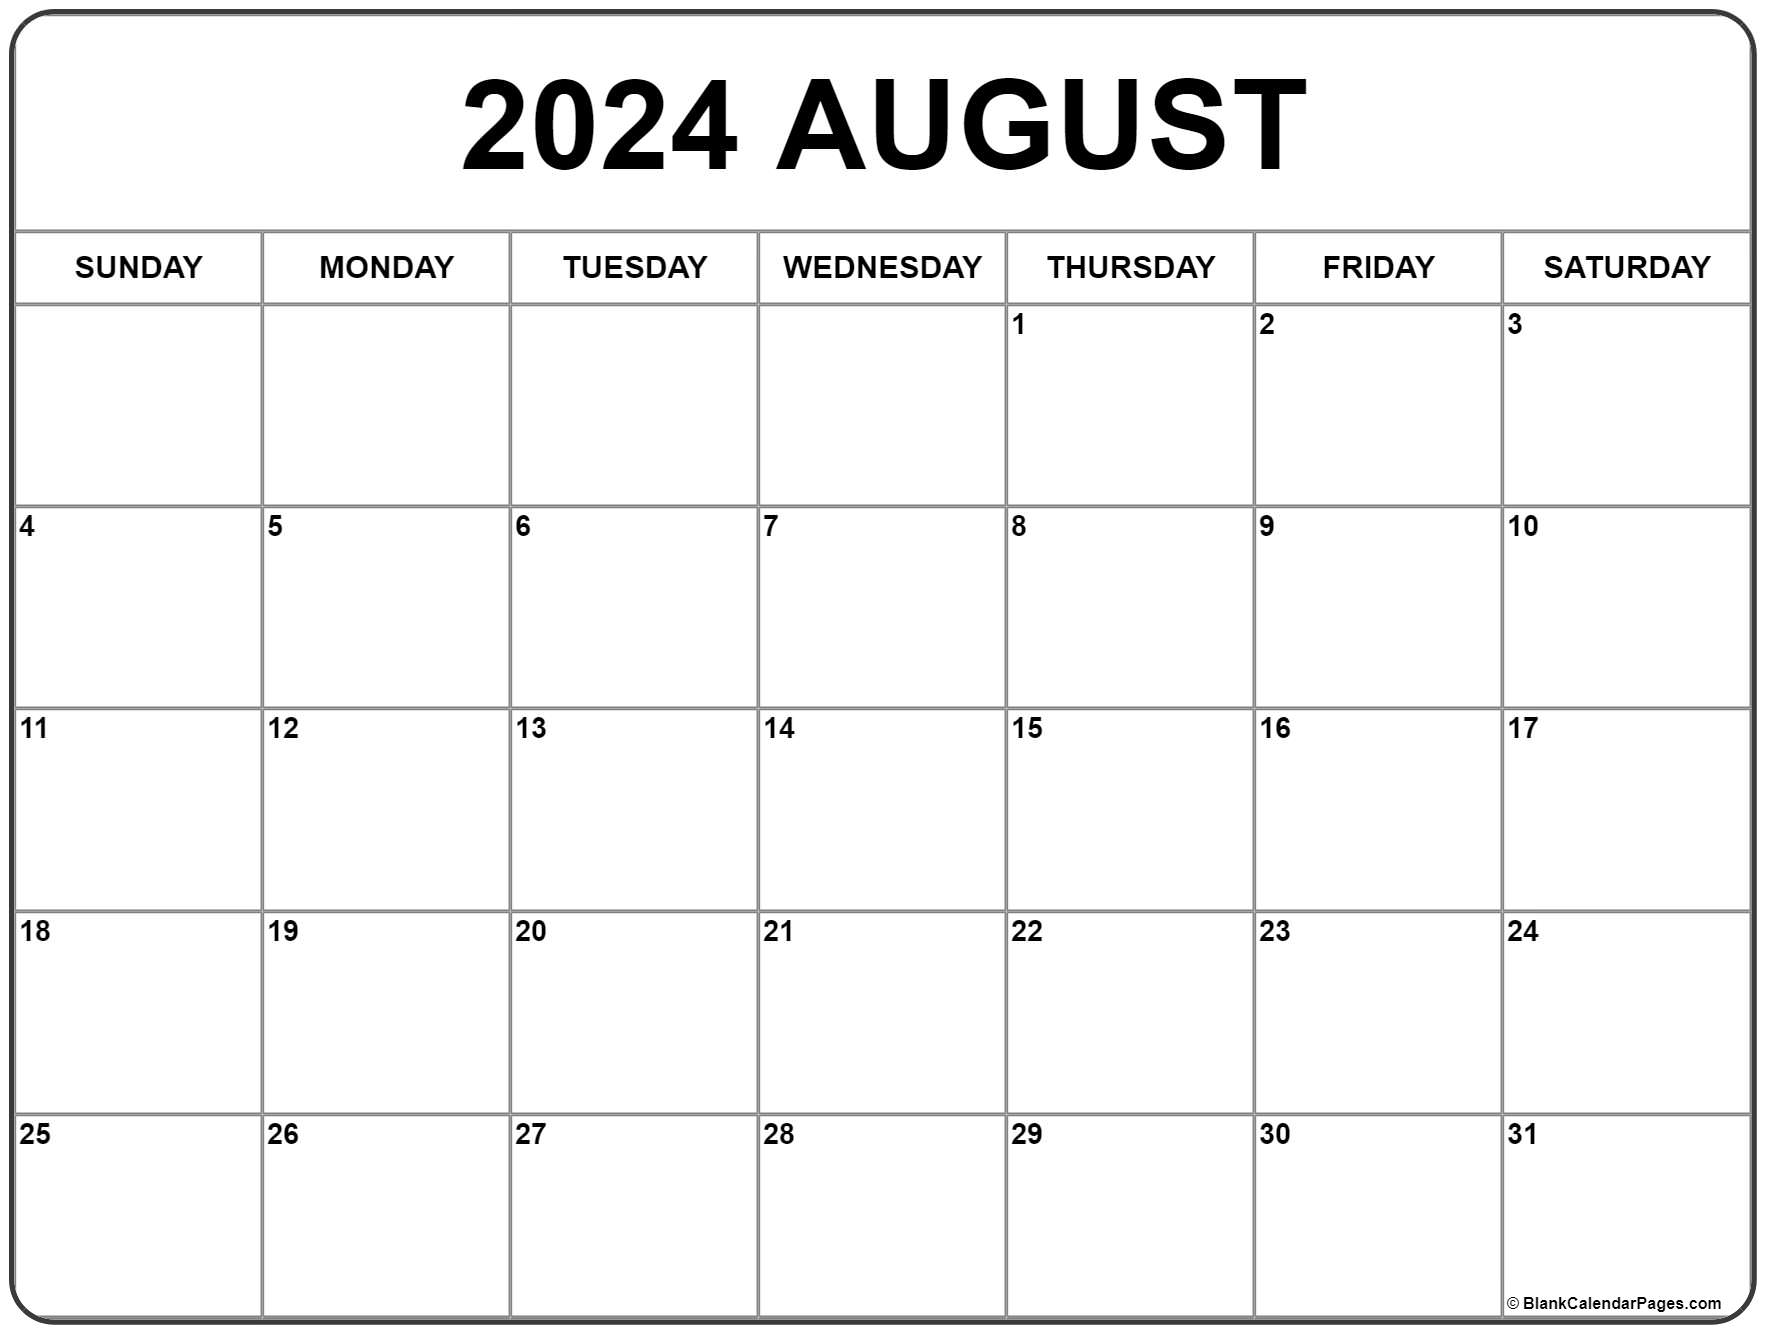 Aug Calendar 2021 August 2021 calendar | free printable monthly calendars